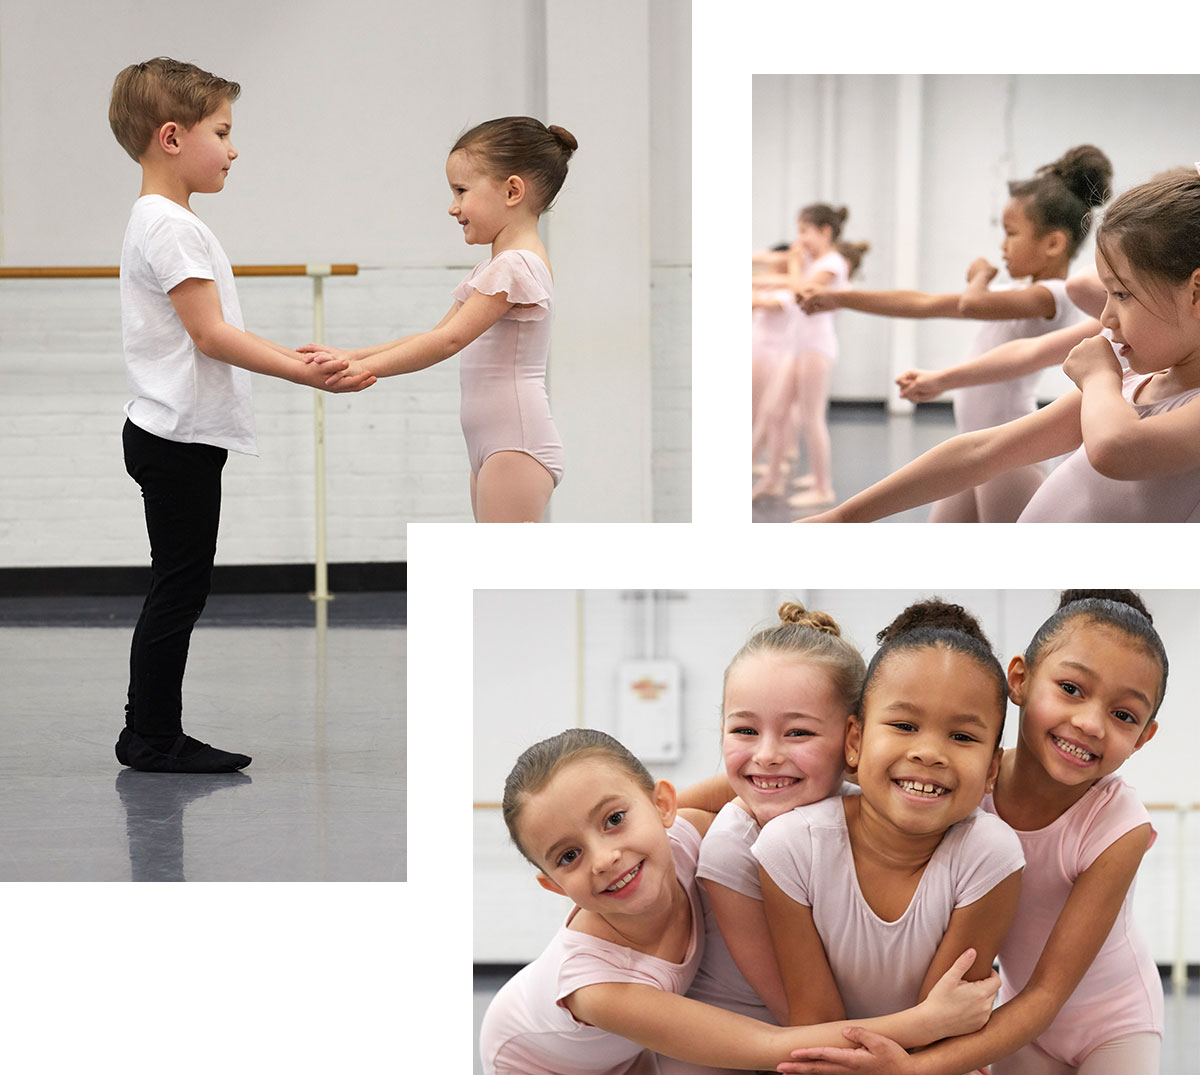 Ballet and dance classes for children - Ballet School, Monroe County, Rochester NY